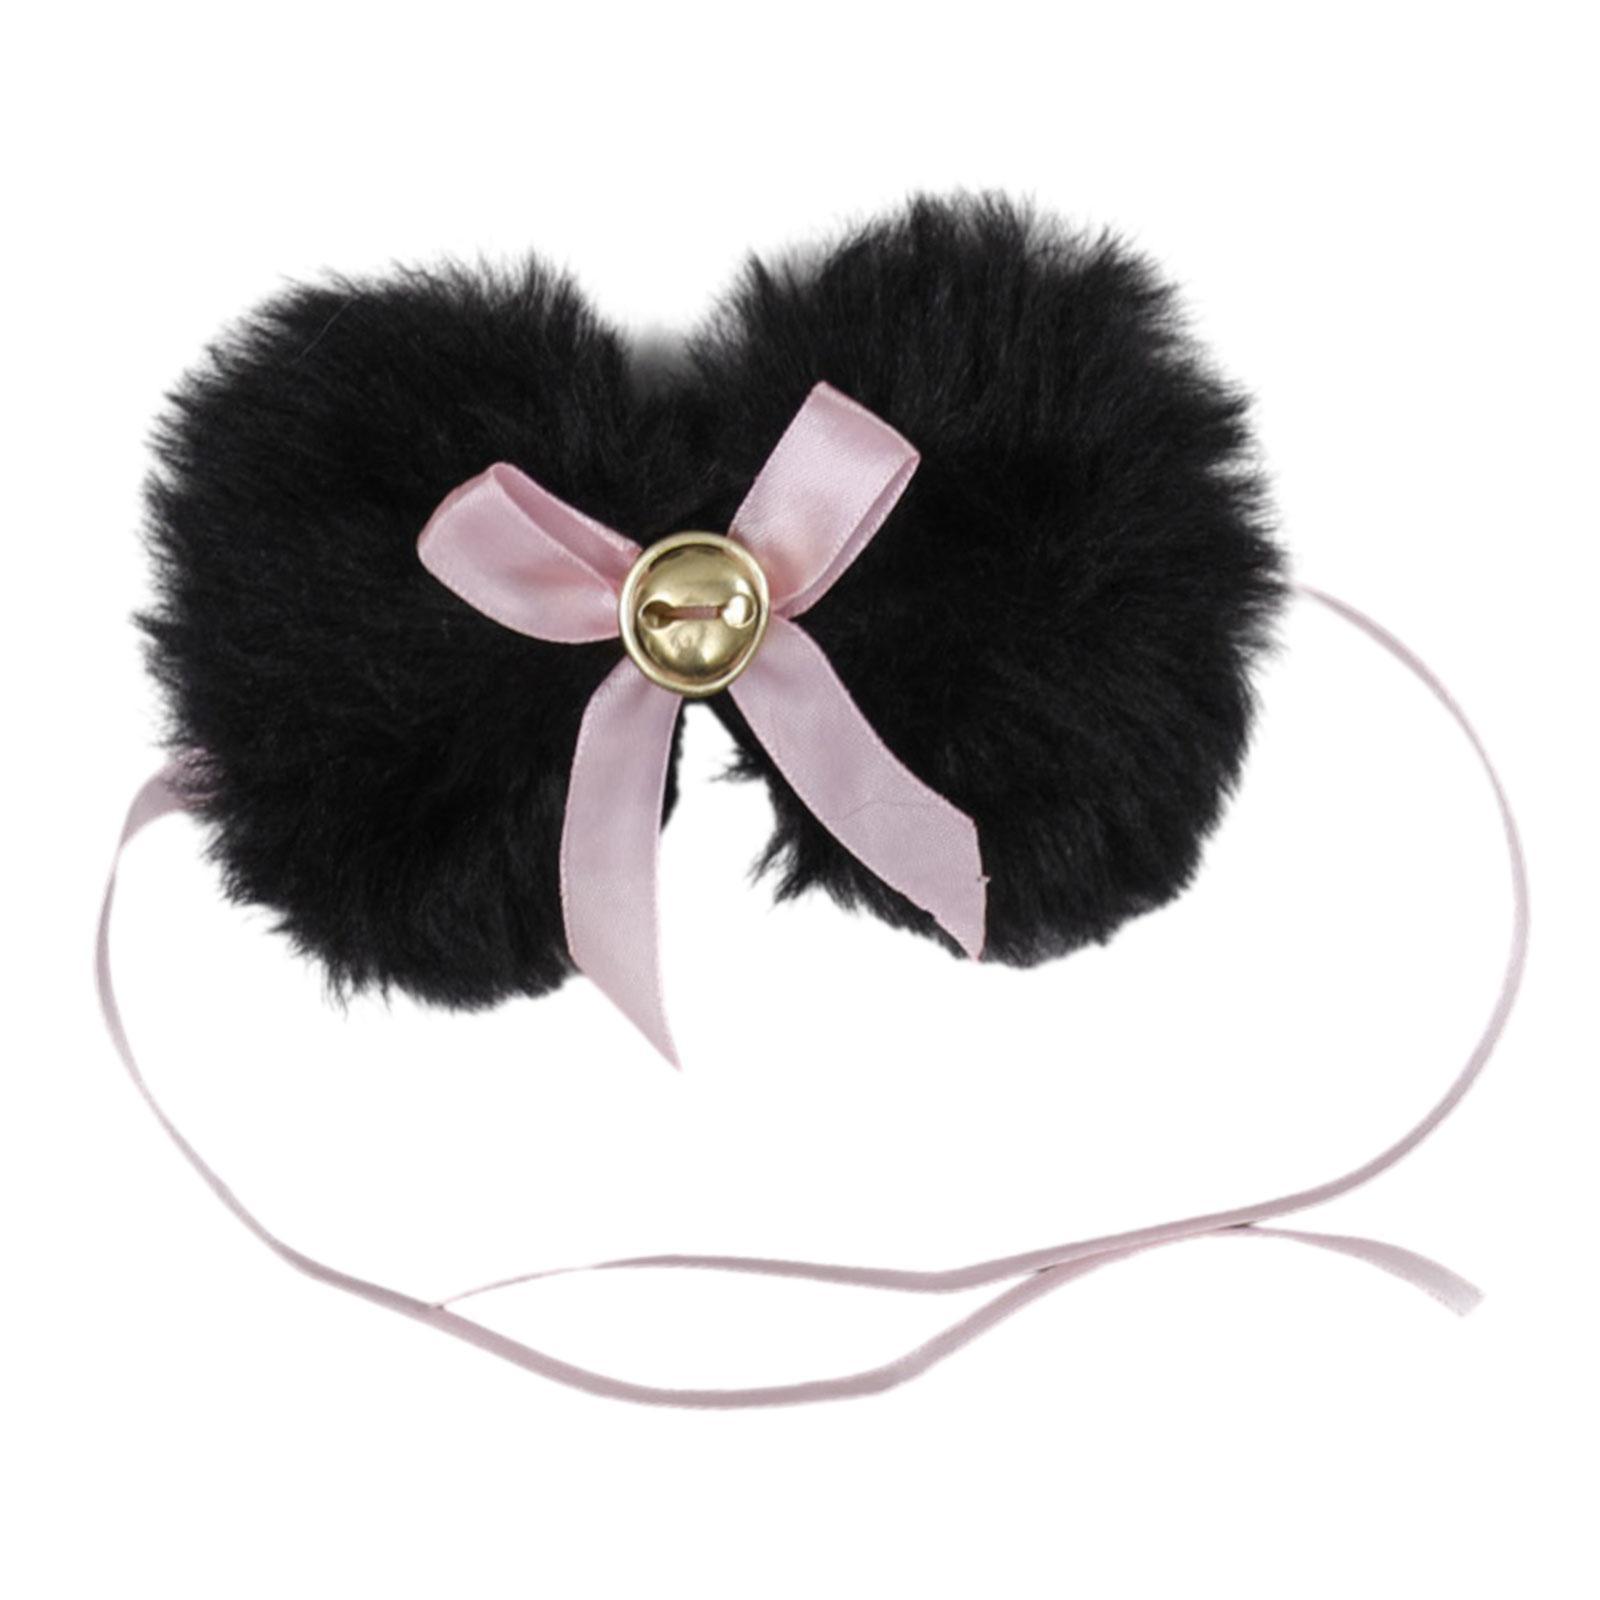 Bell Choker for Women Furry Bowknot Costume Accessory Cravat Lolita Neck Bow